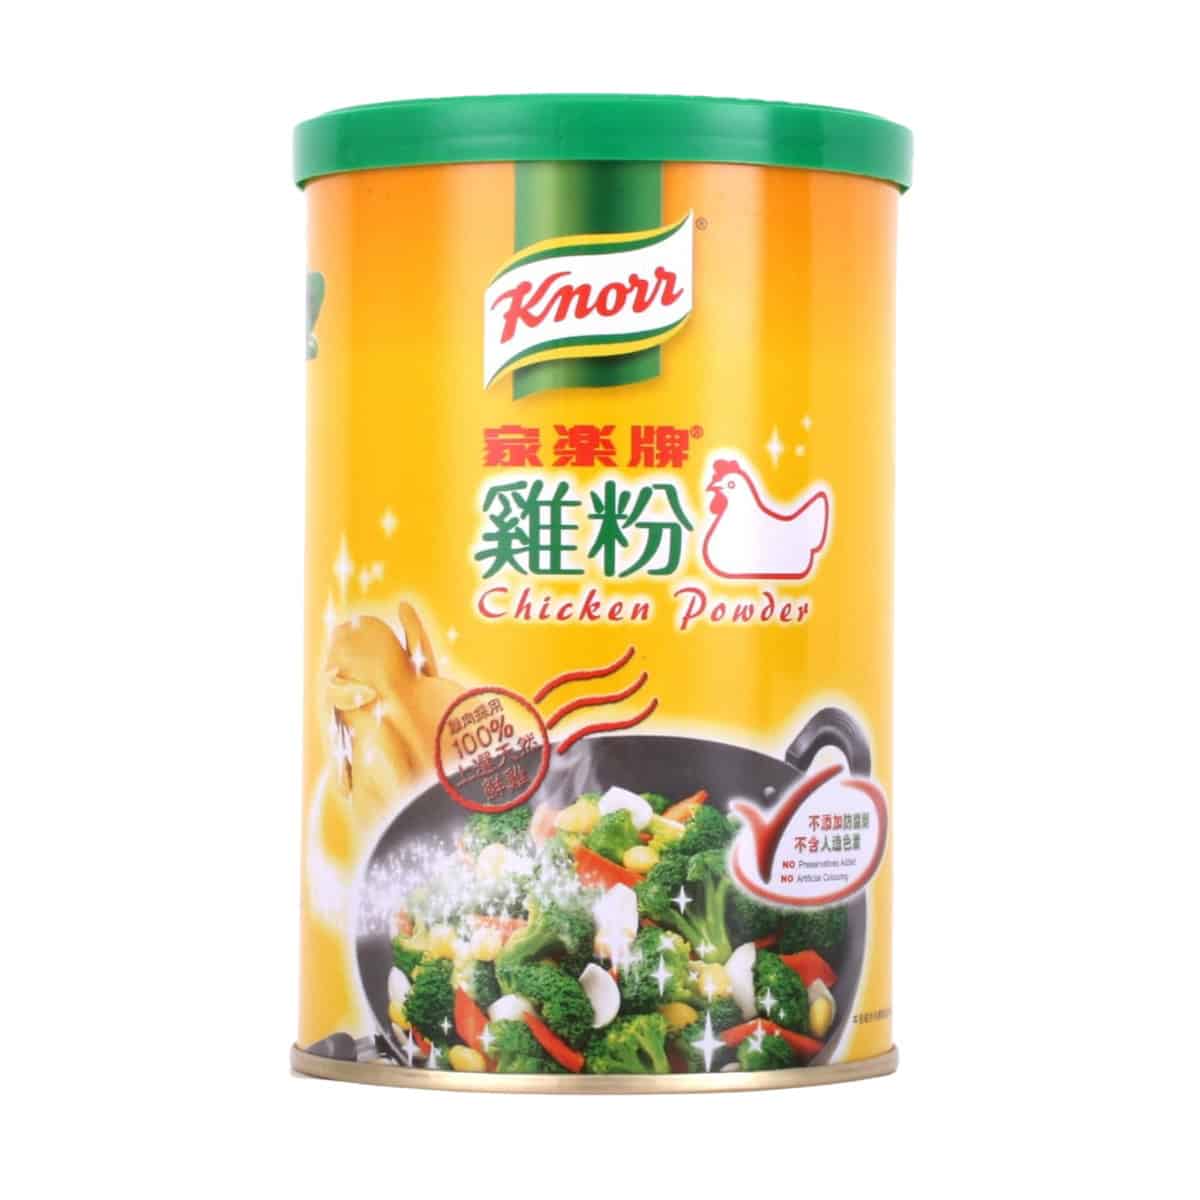 Buy Knorr Chicken Powder - 273 gm